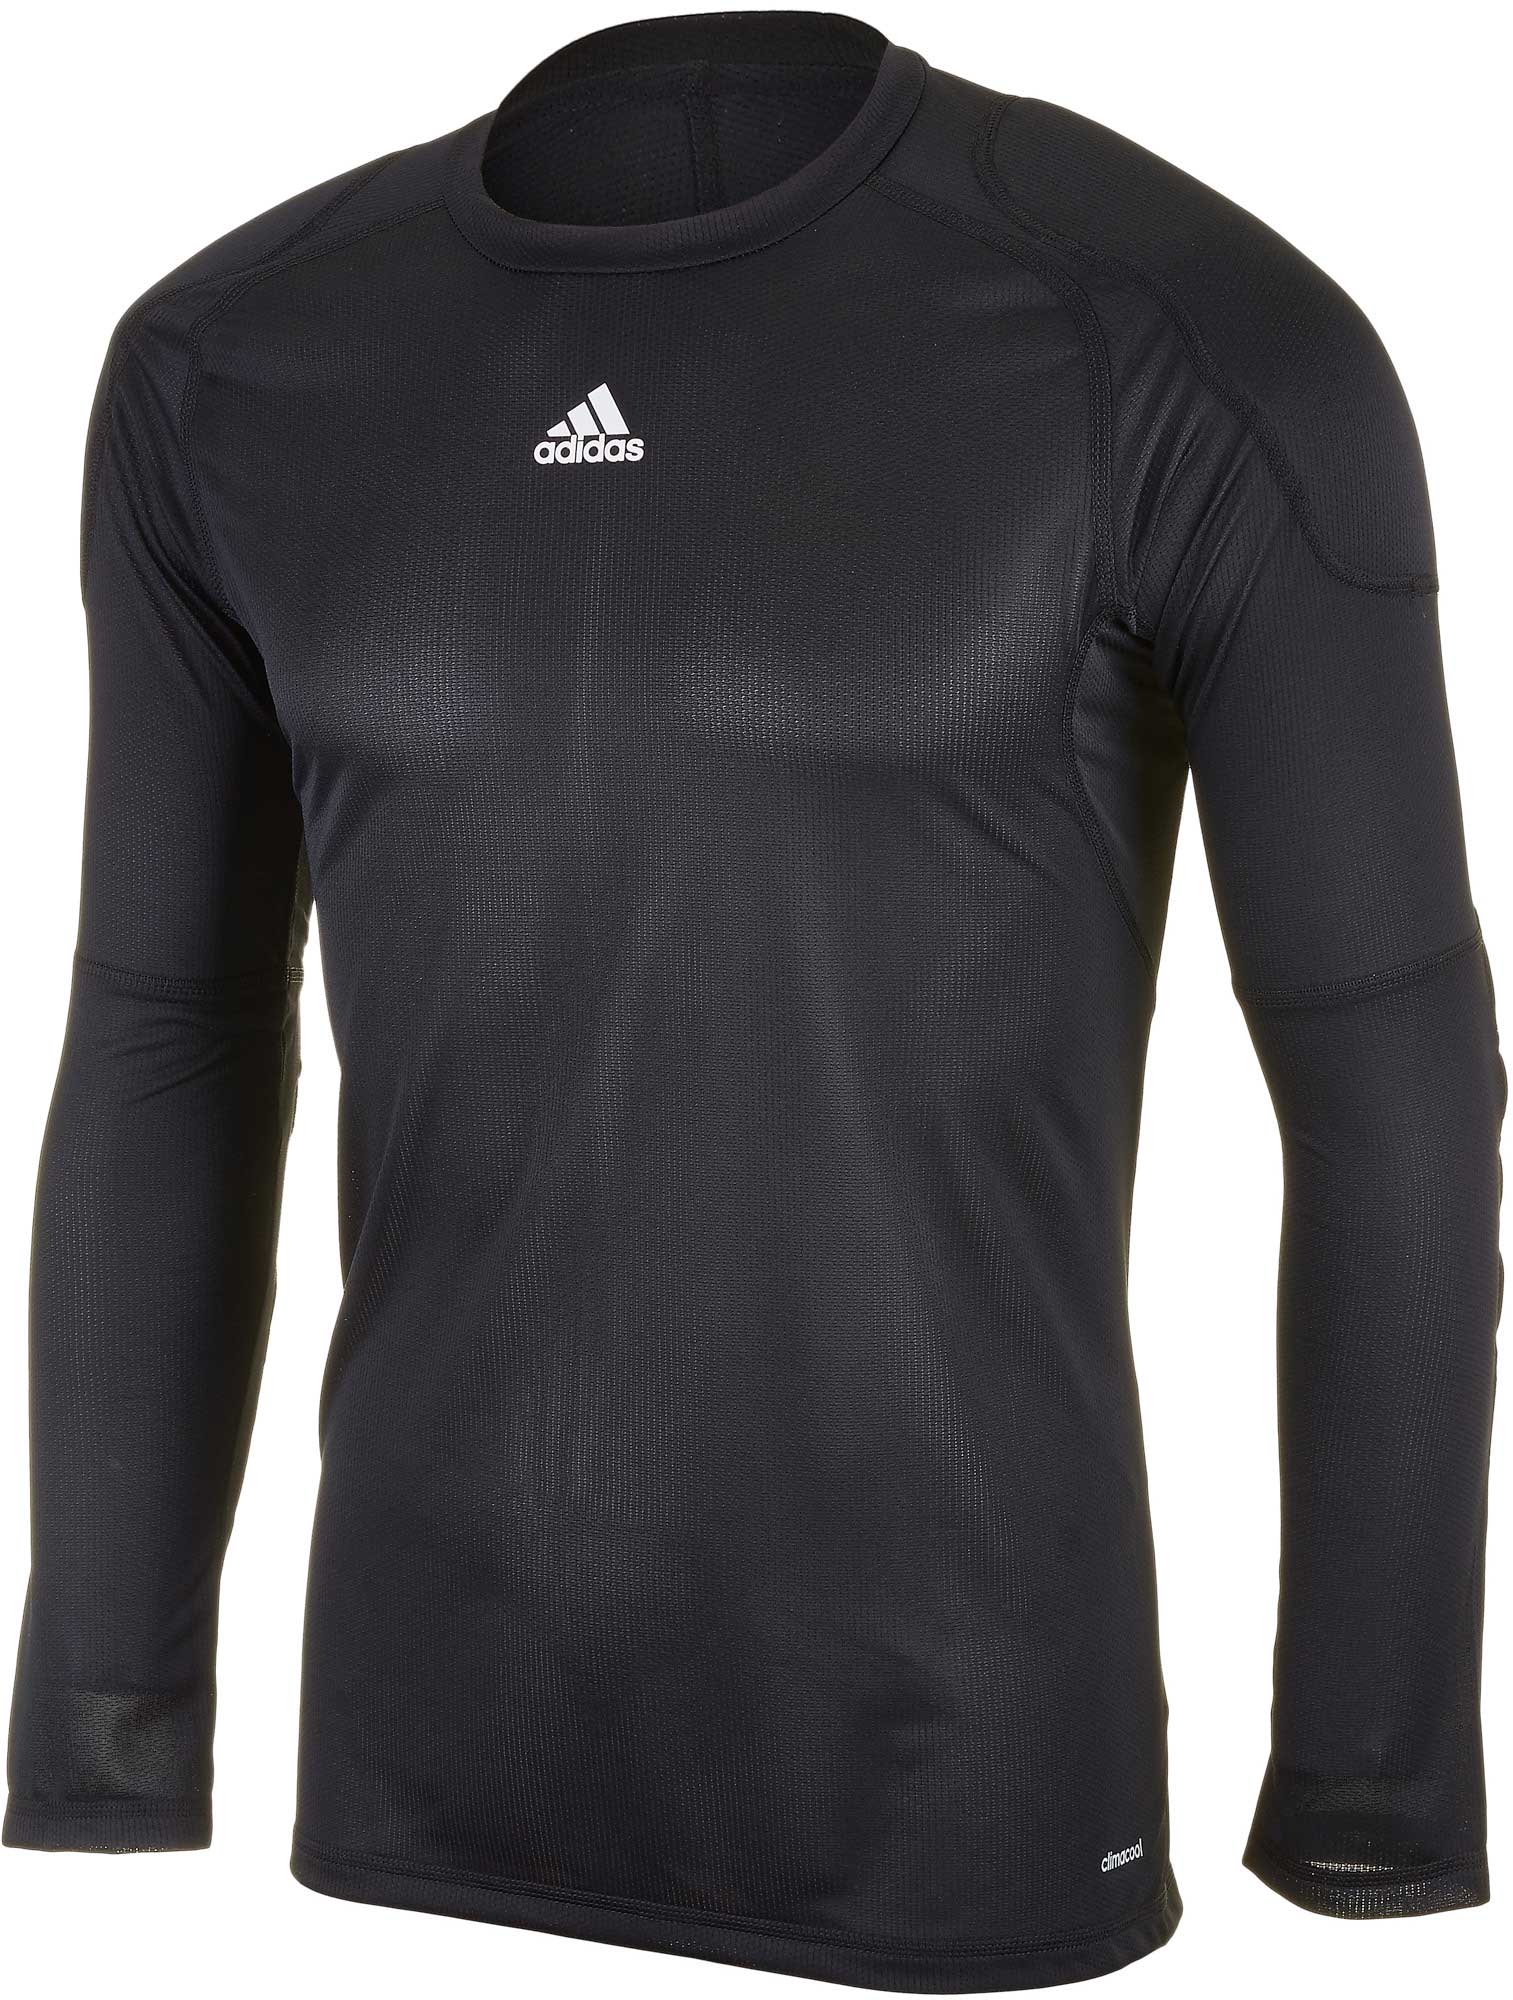 adidas goalkeeper undershirt